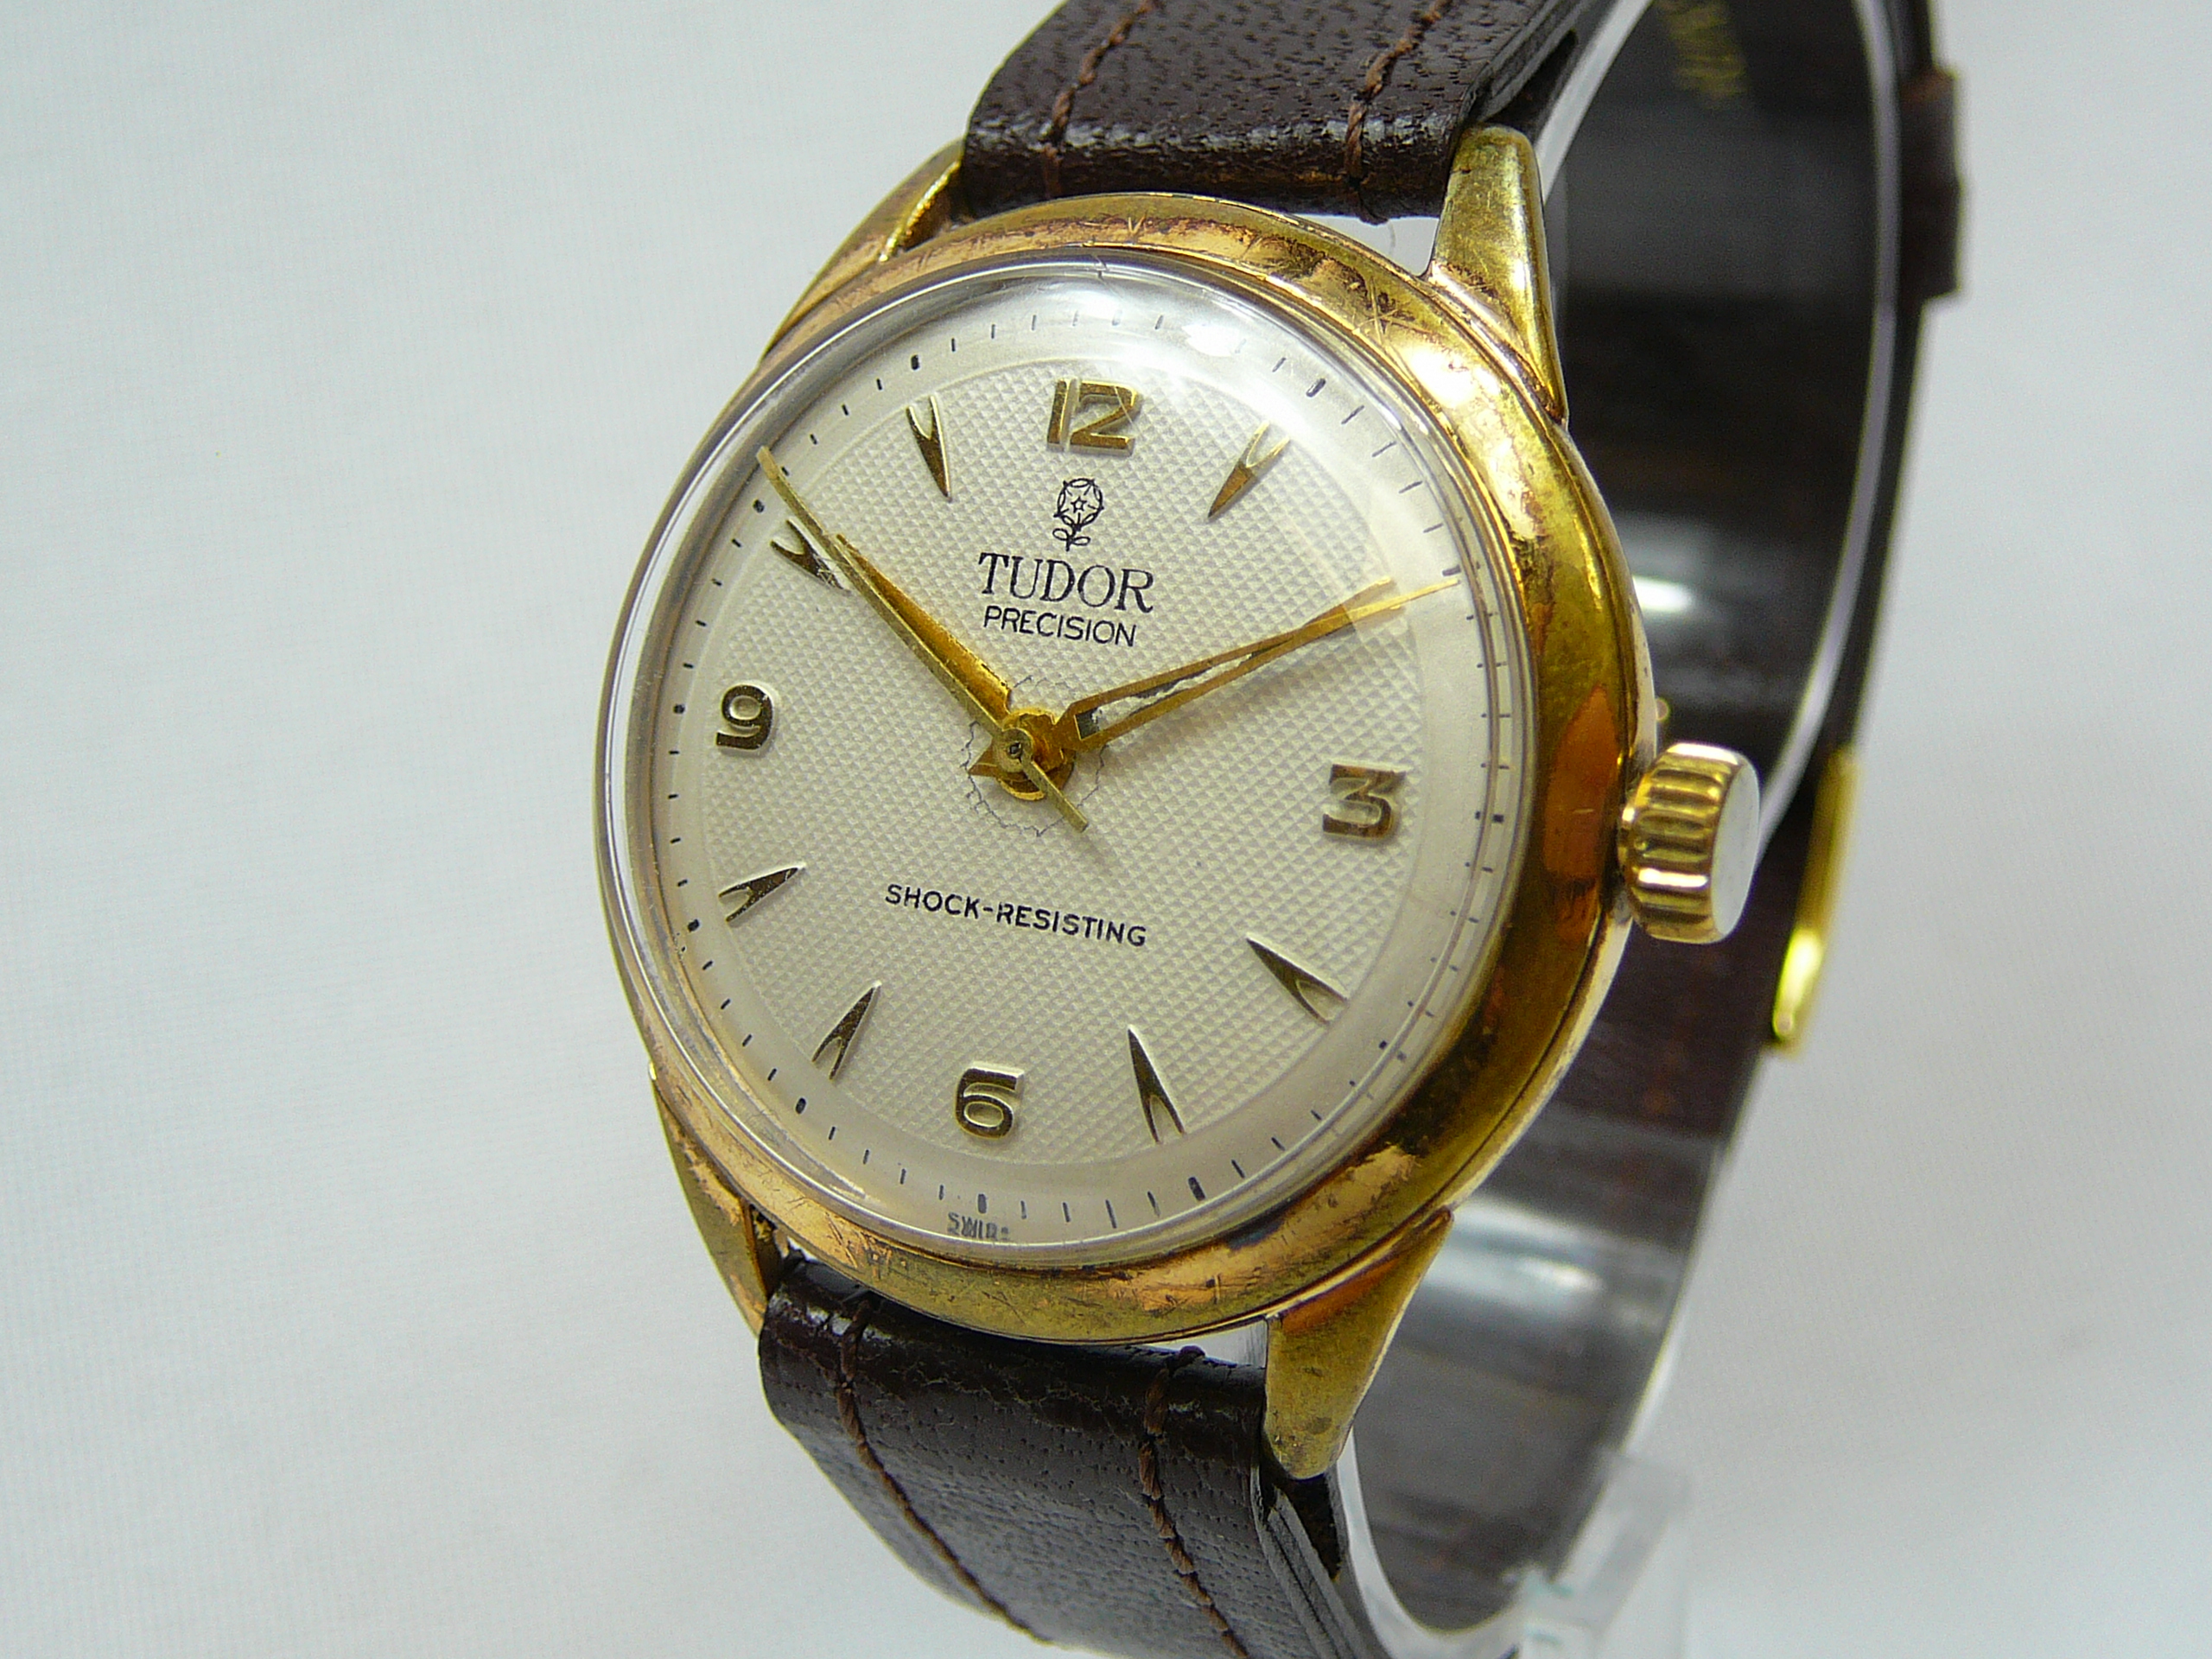 Gents Vintage Tudor Wrist Watch - Image 2 of 3